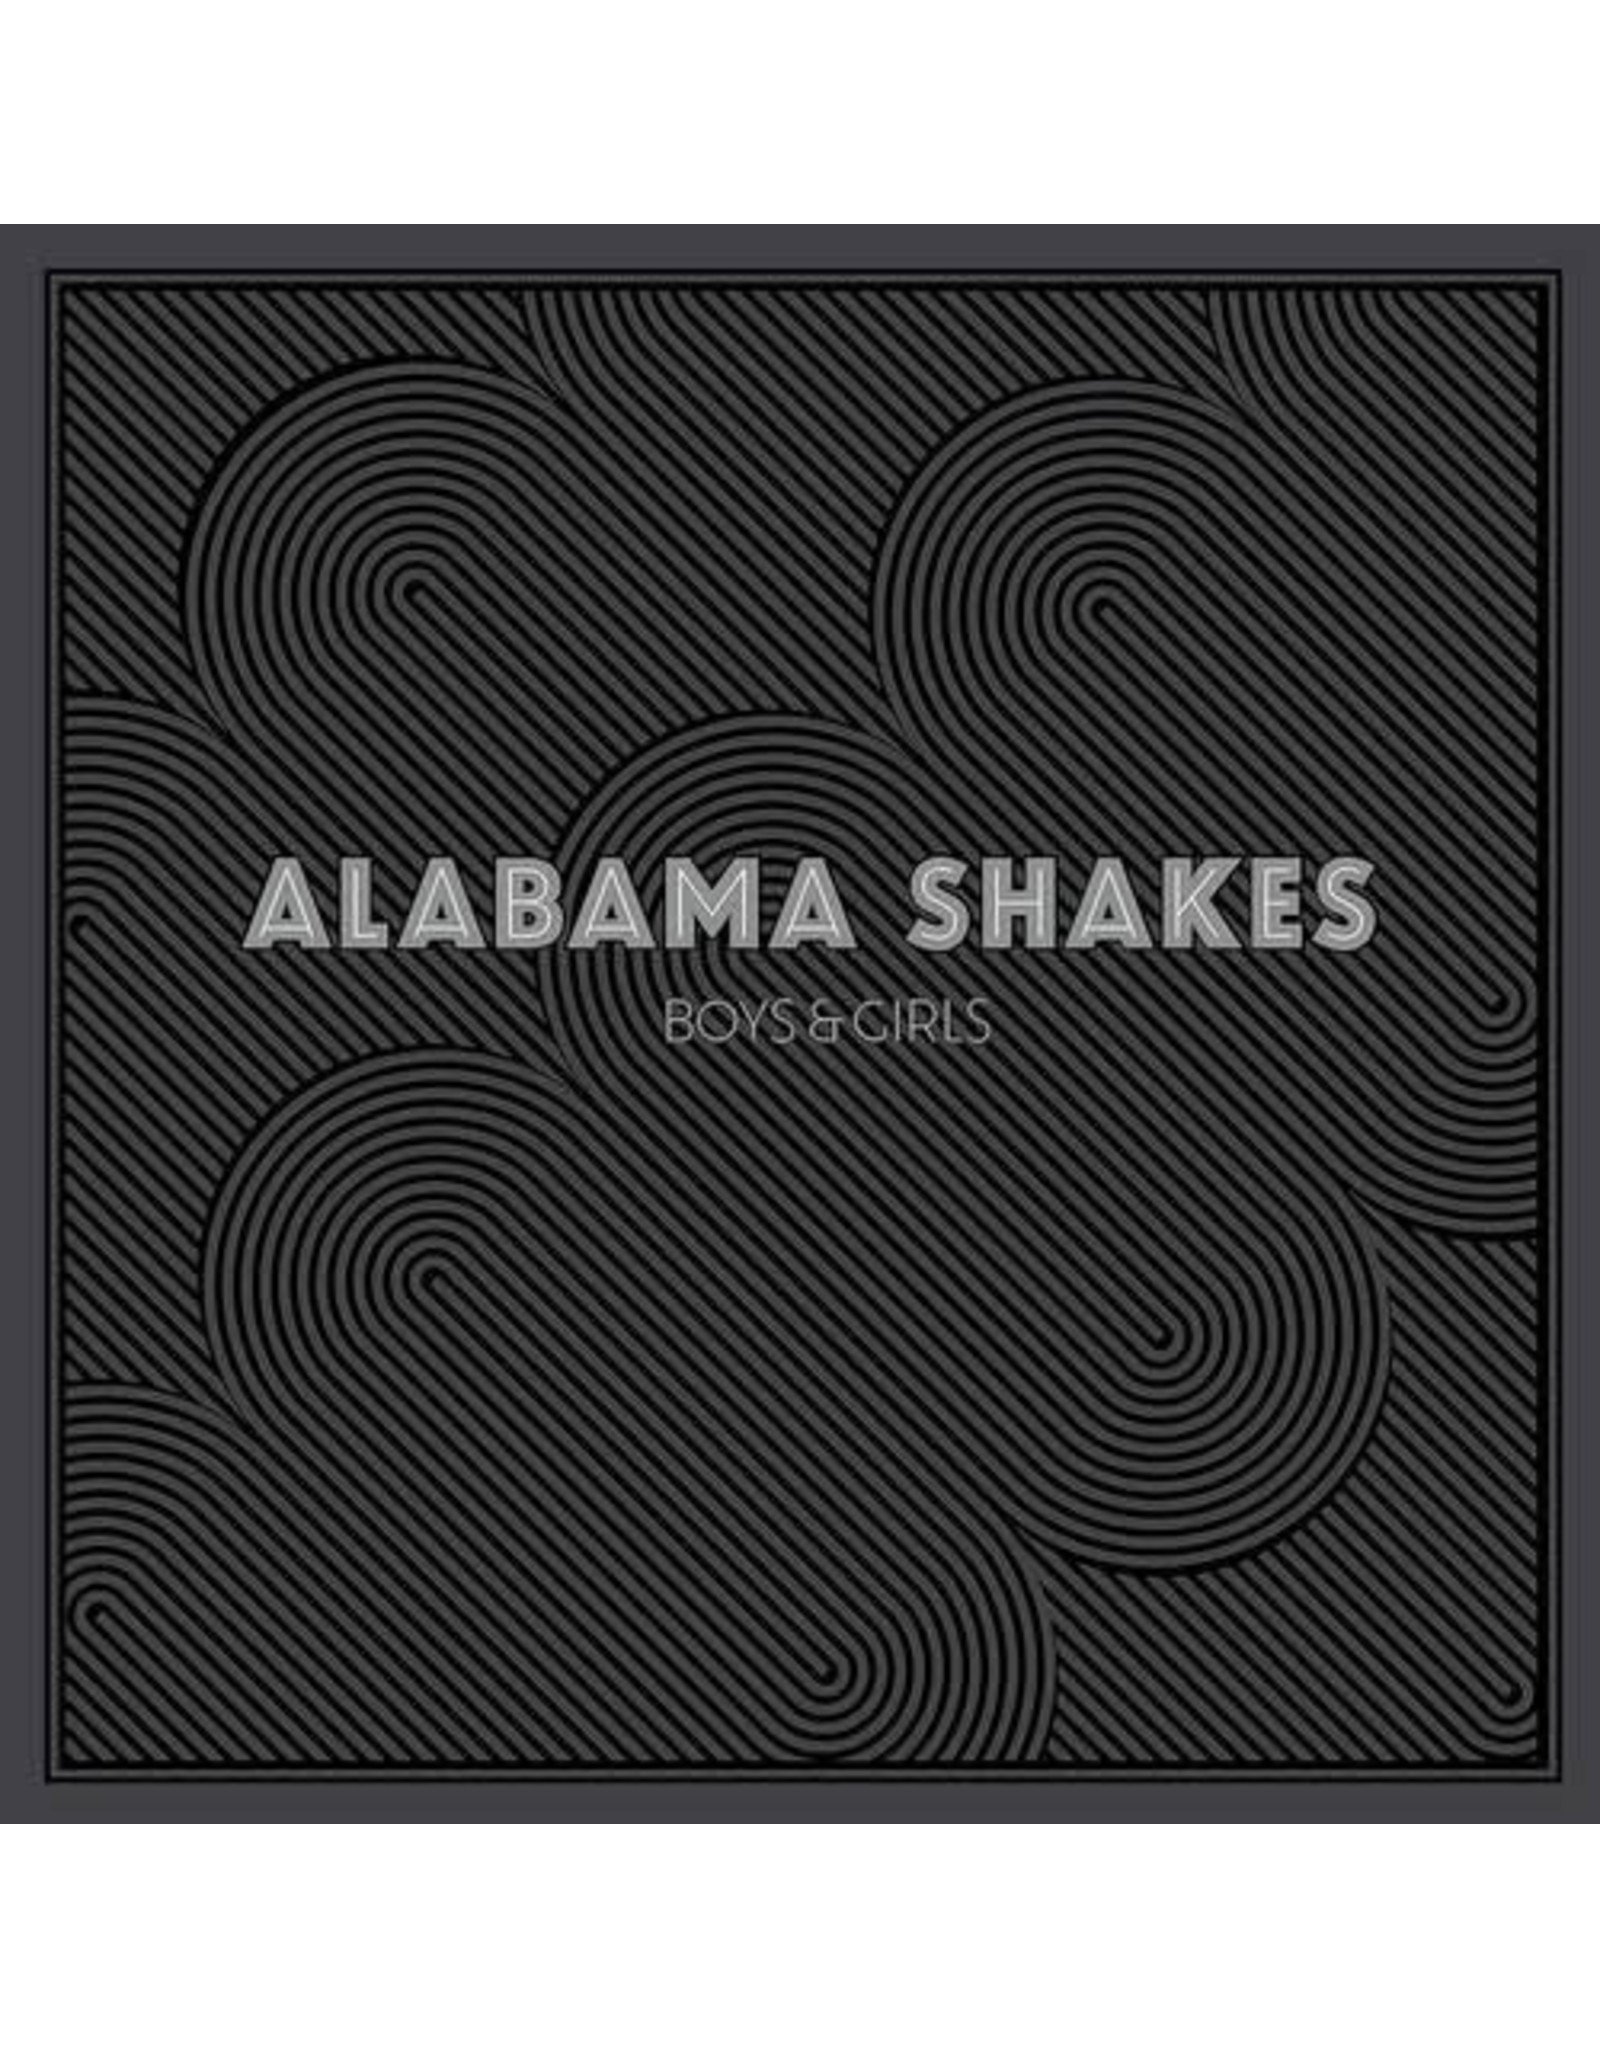 Alabama Shakes / Boys and Girls (Colored Vinyl)